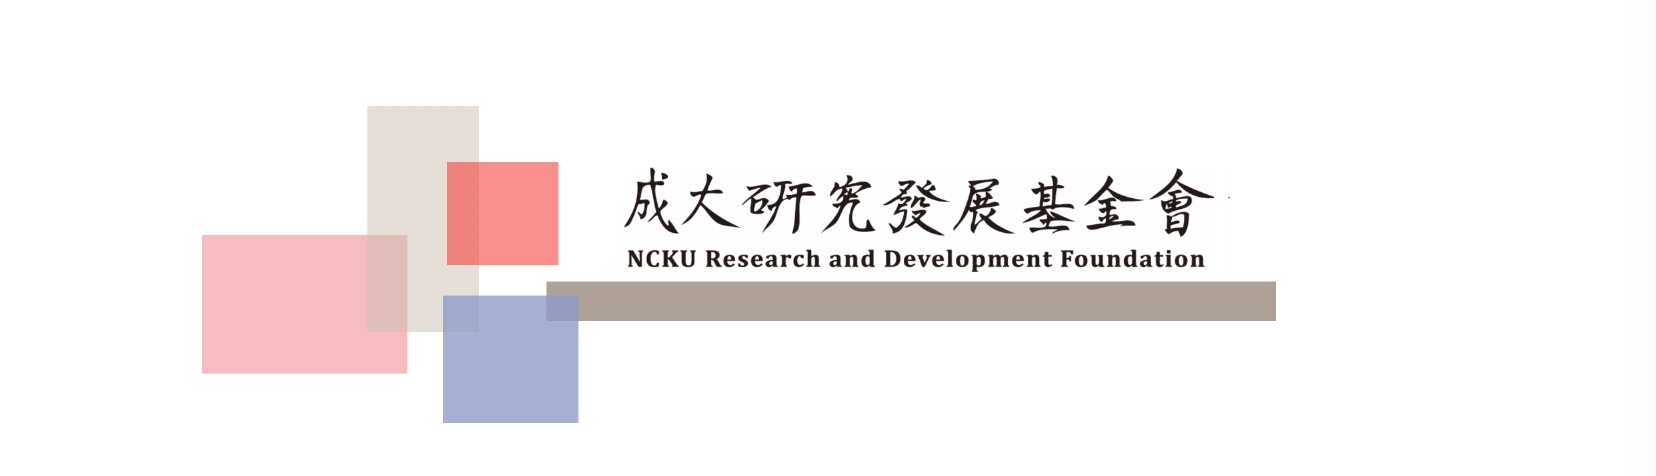 NCKU R&D Foundation